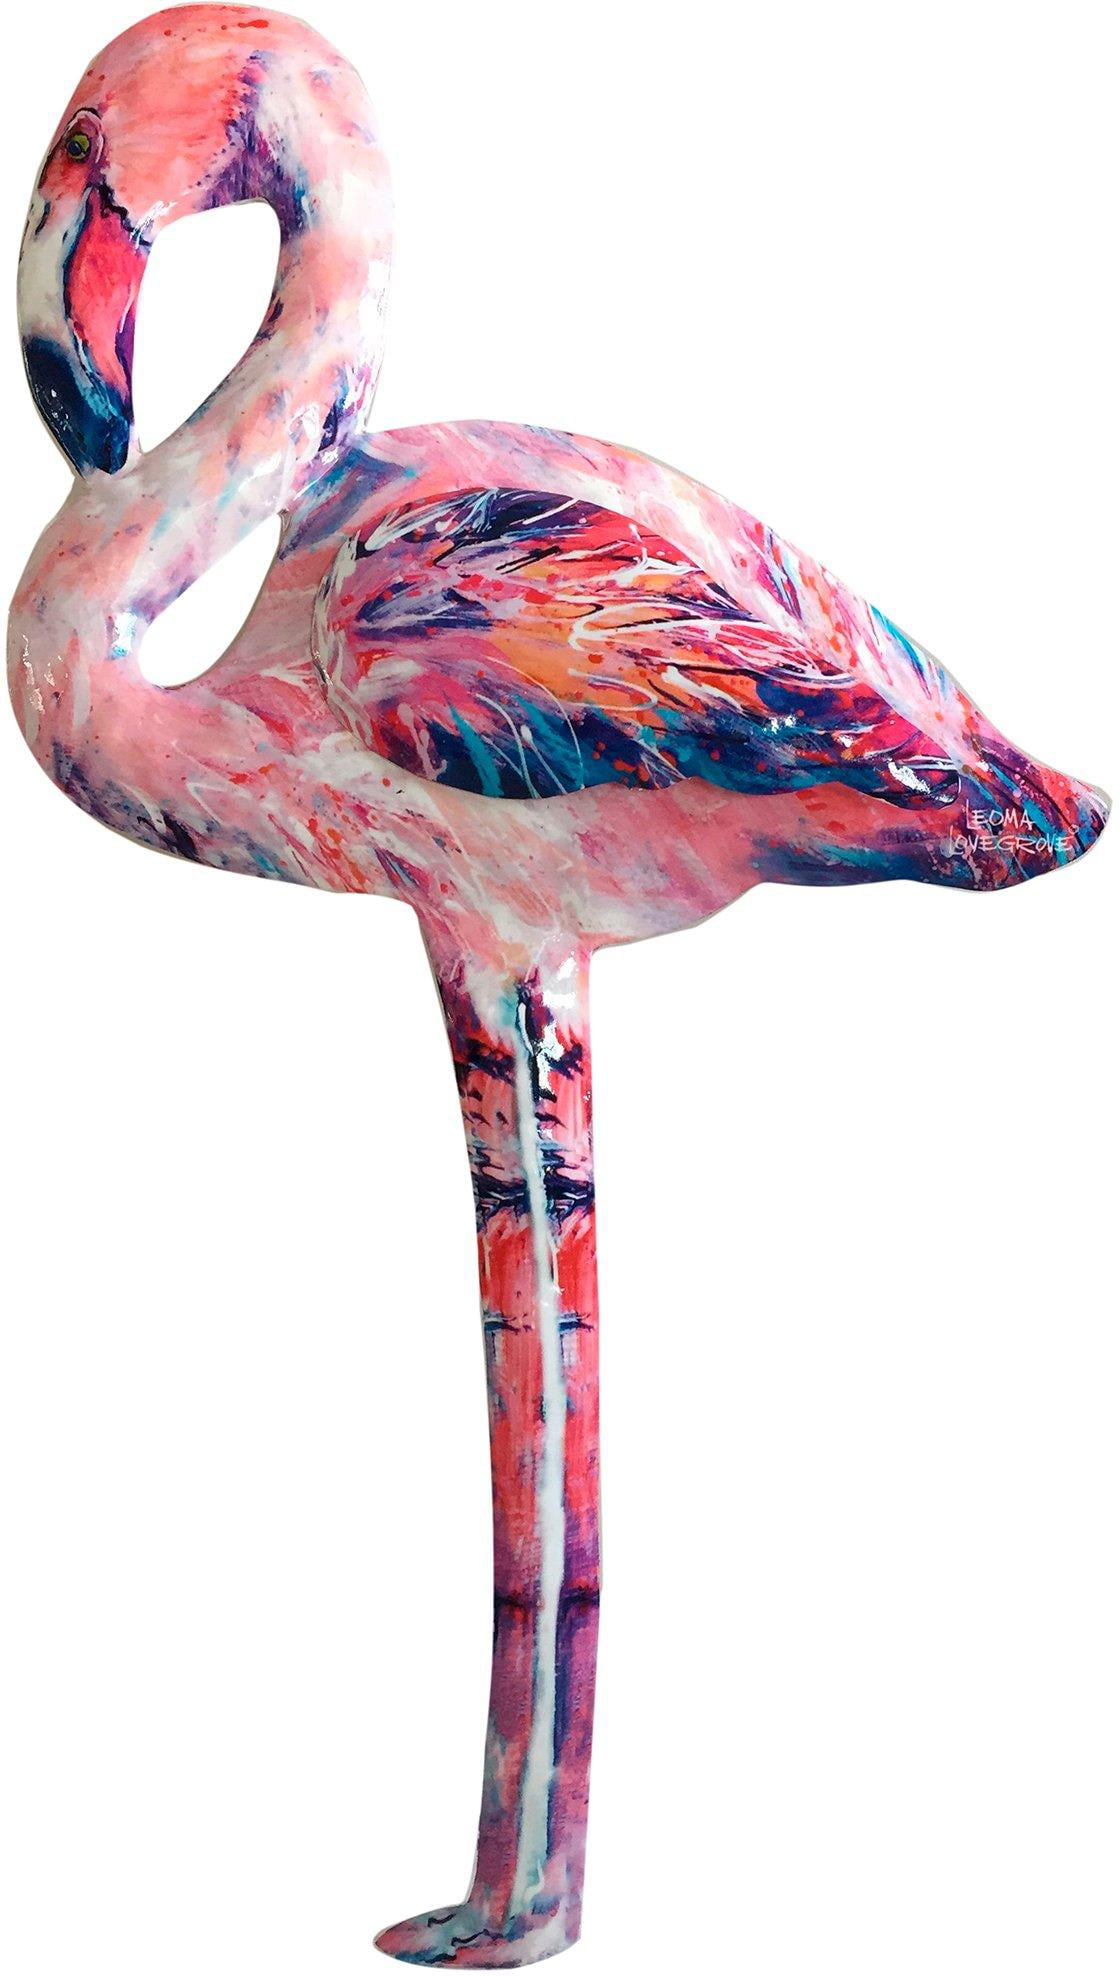 Leoma Lovegrove Flamingo Metal Wall Art One Size Pink multi - Walmart